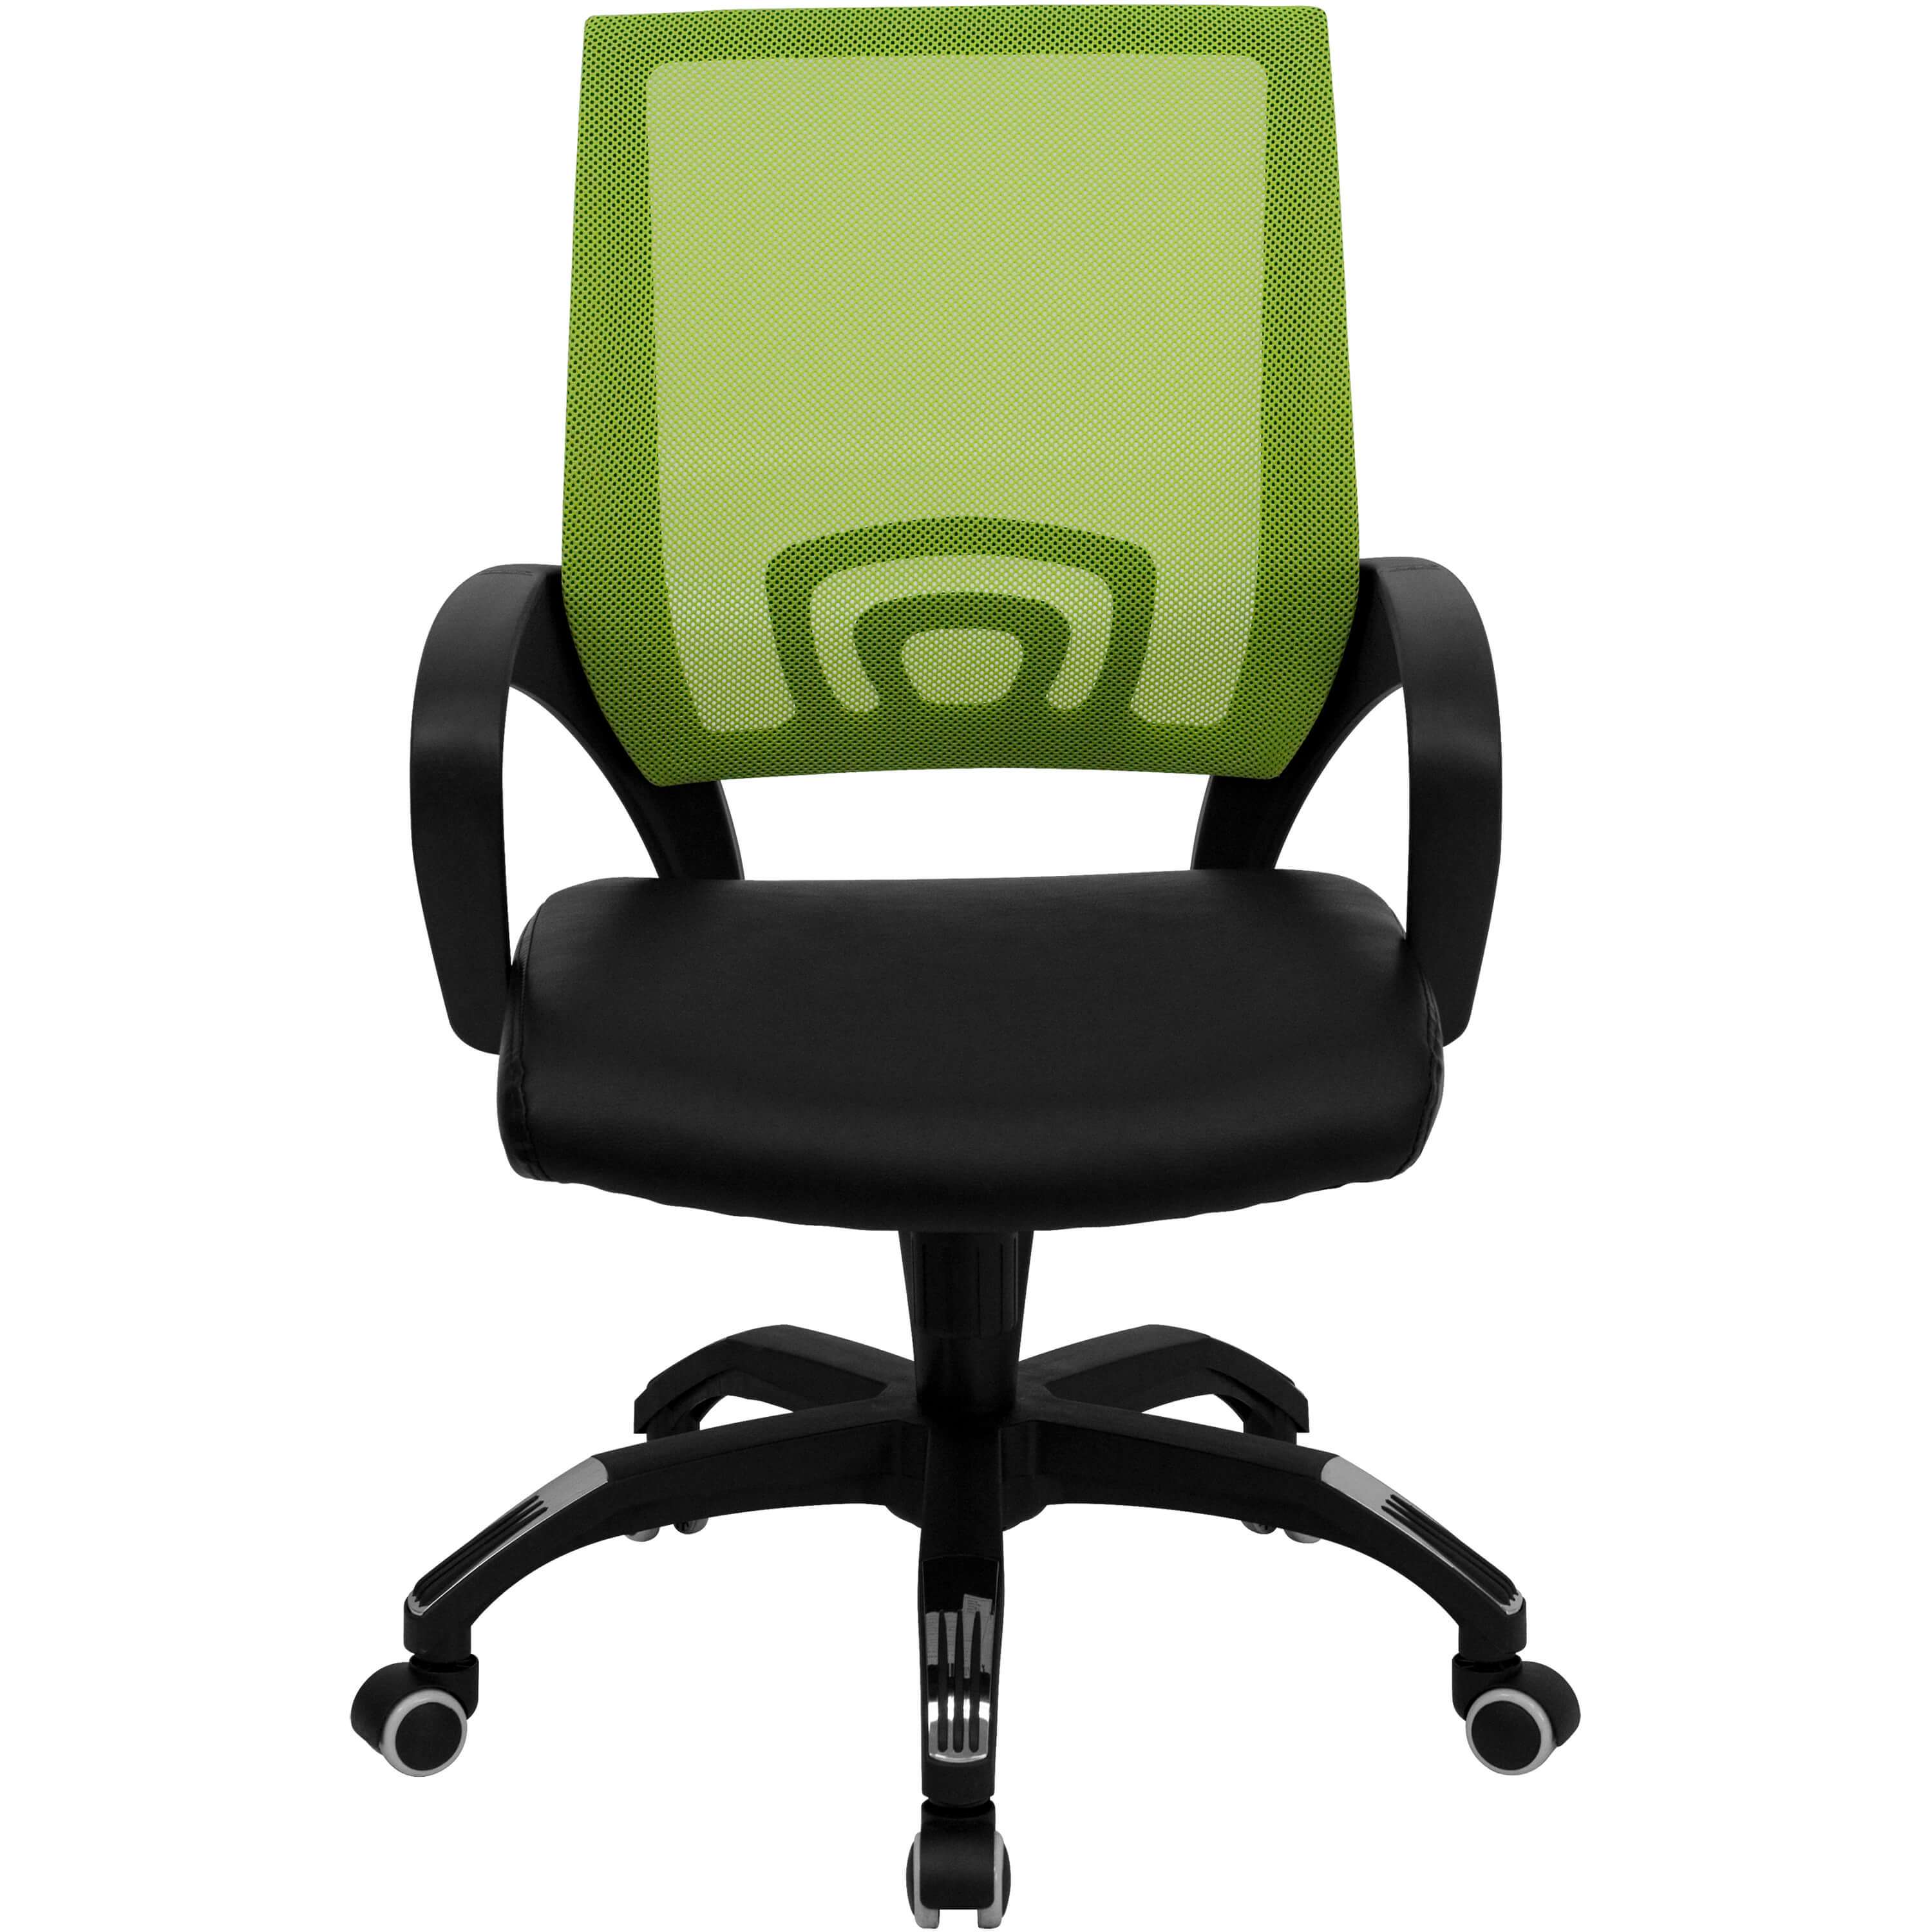 Colorful desk chairs CUB CP B176A01 GREEN GG FLA